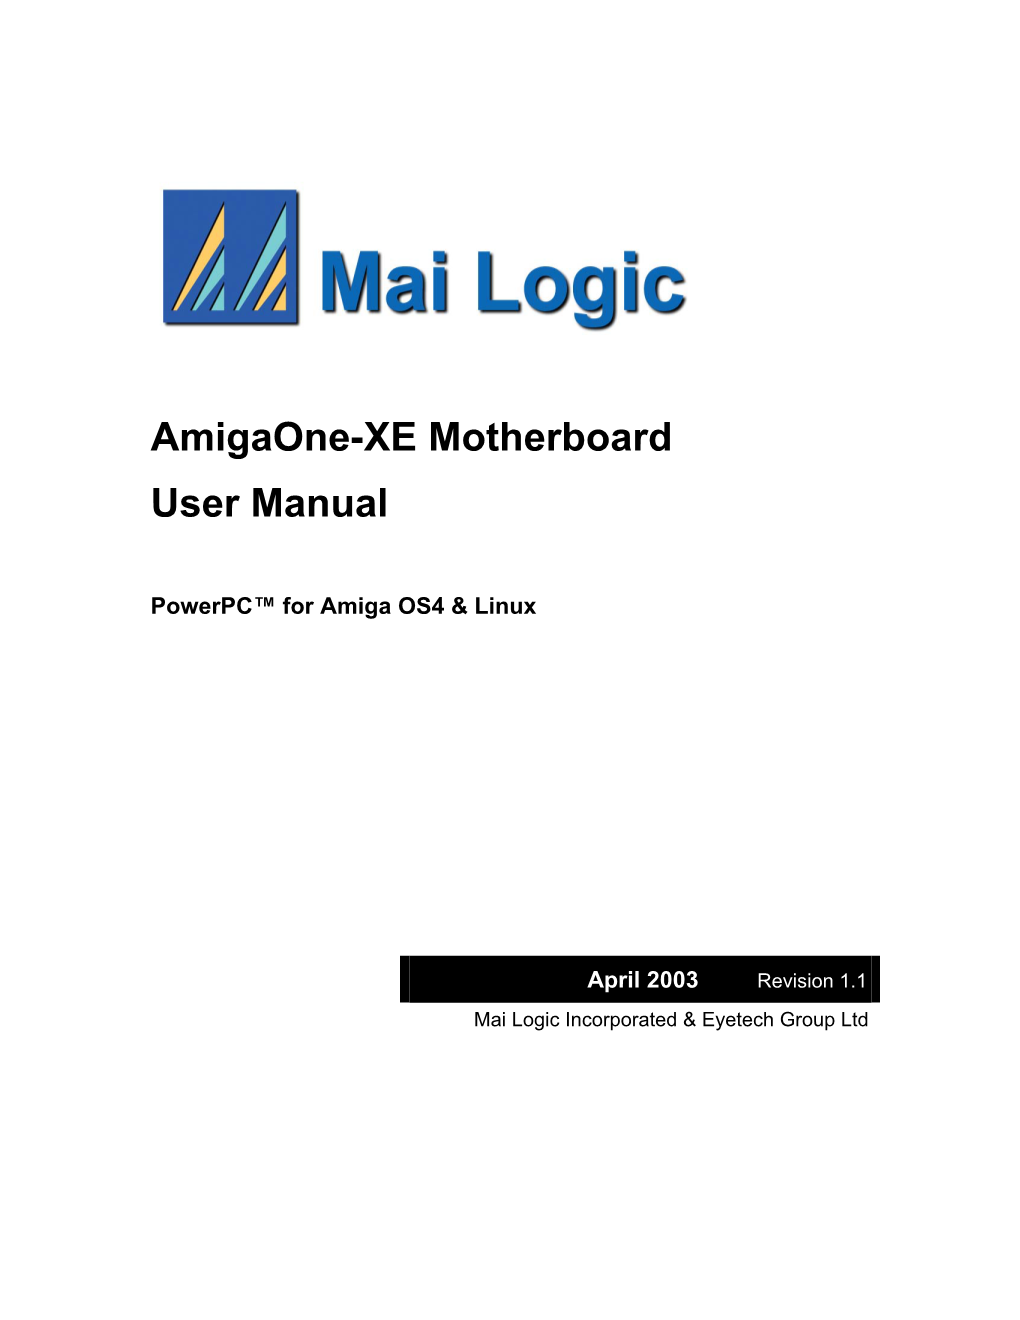 Amigaone-XE Motherboard User Manual